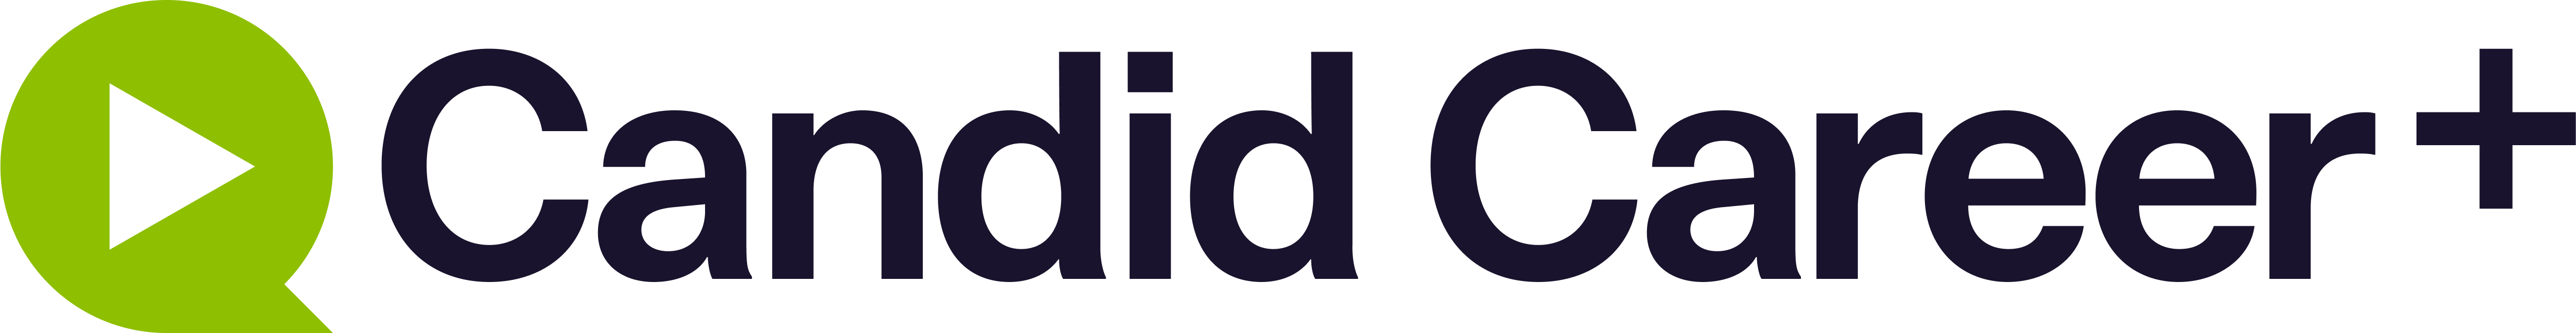 Candid career logo 